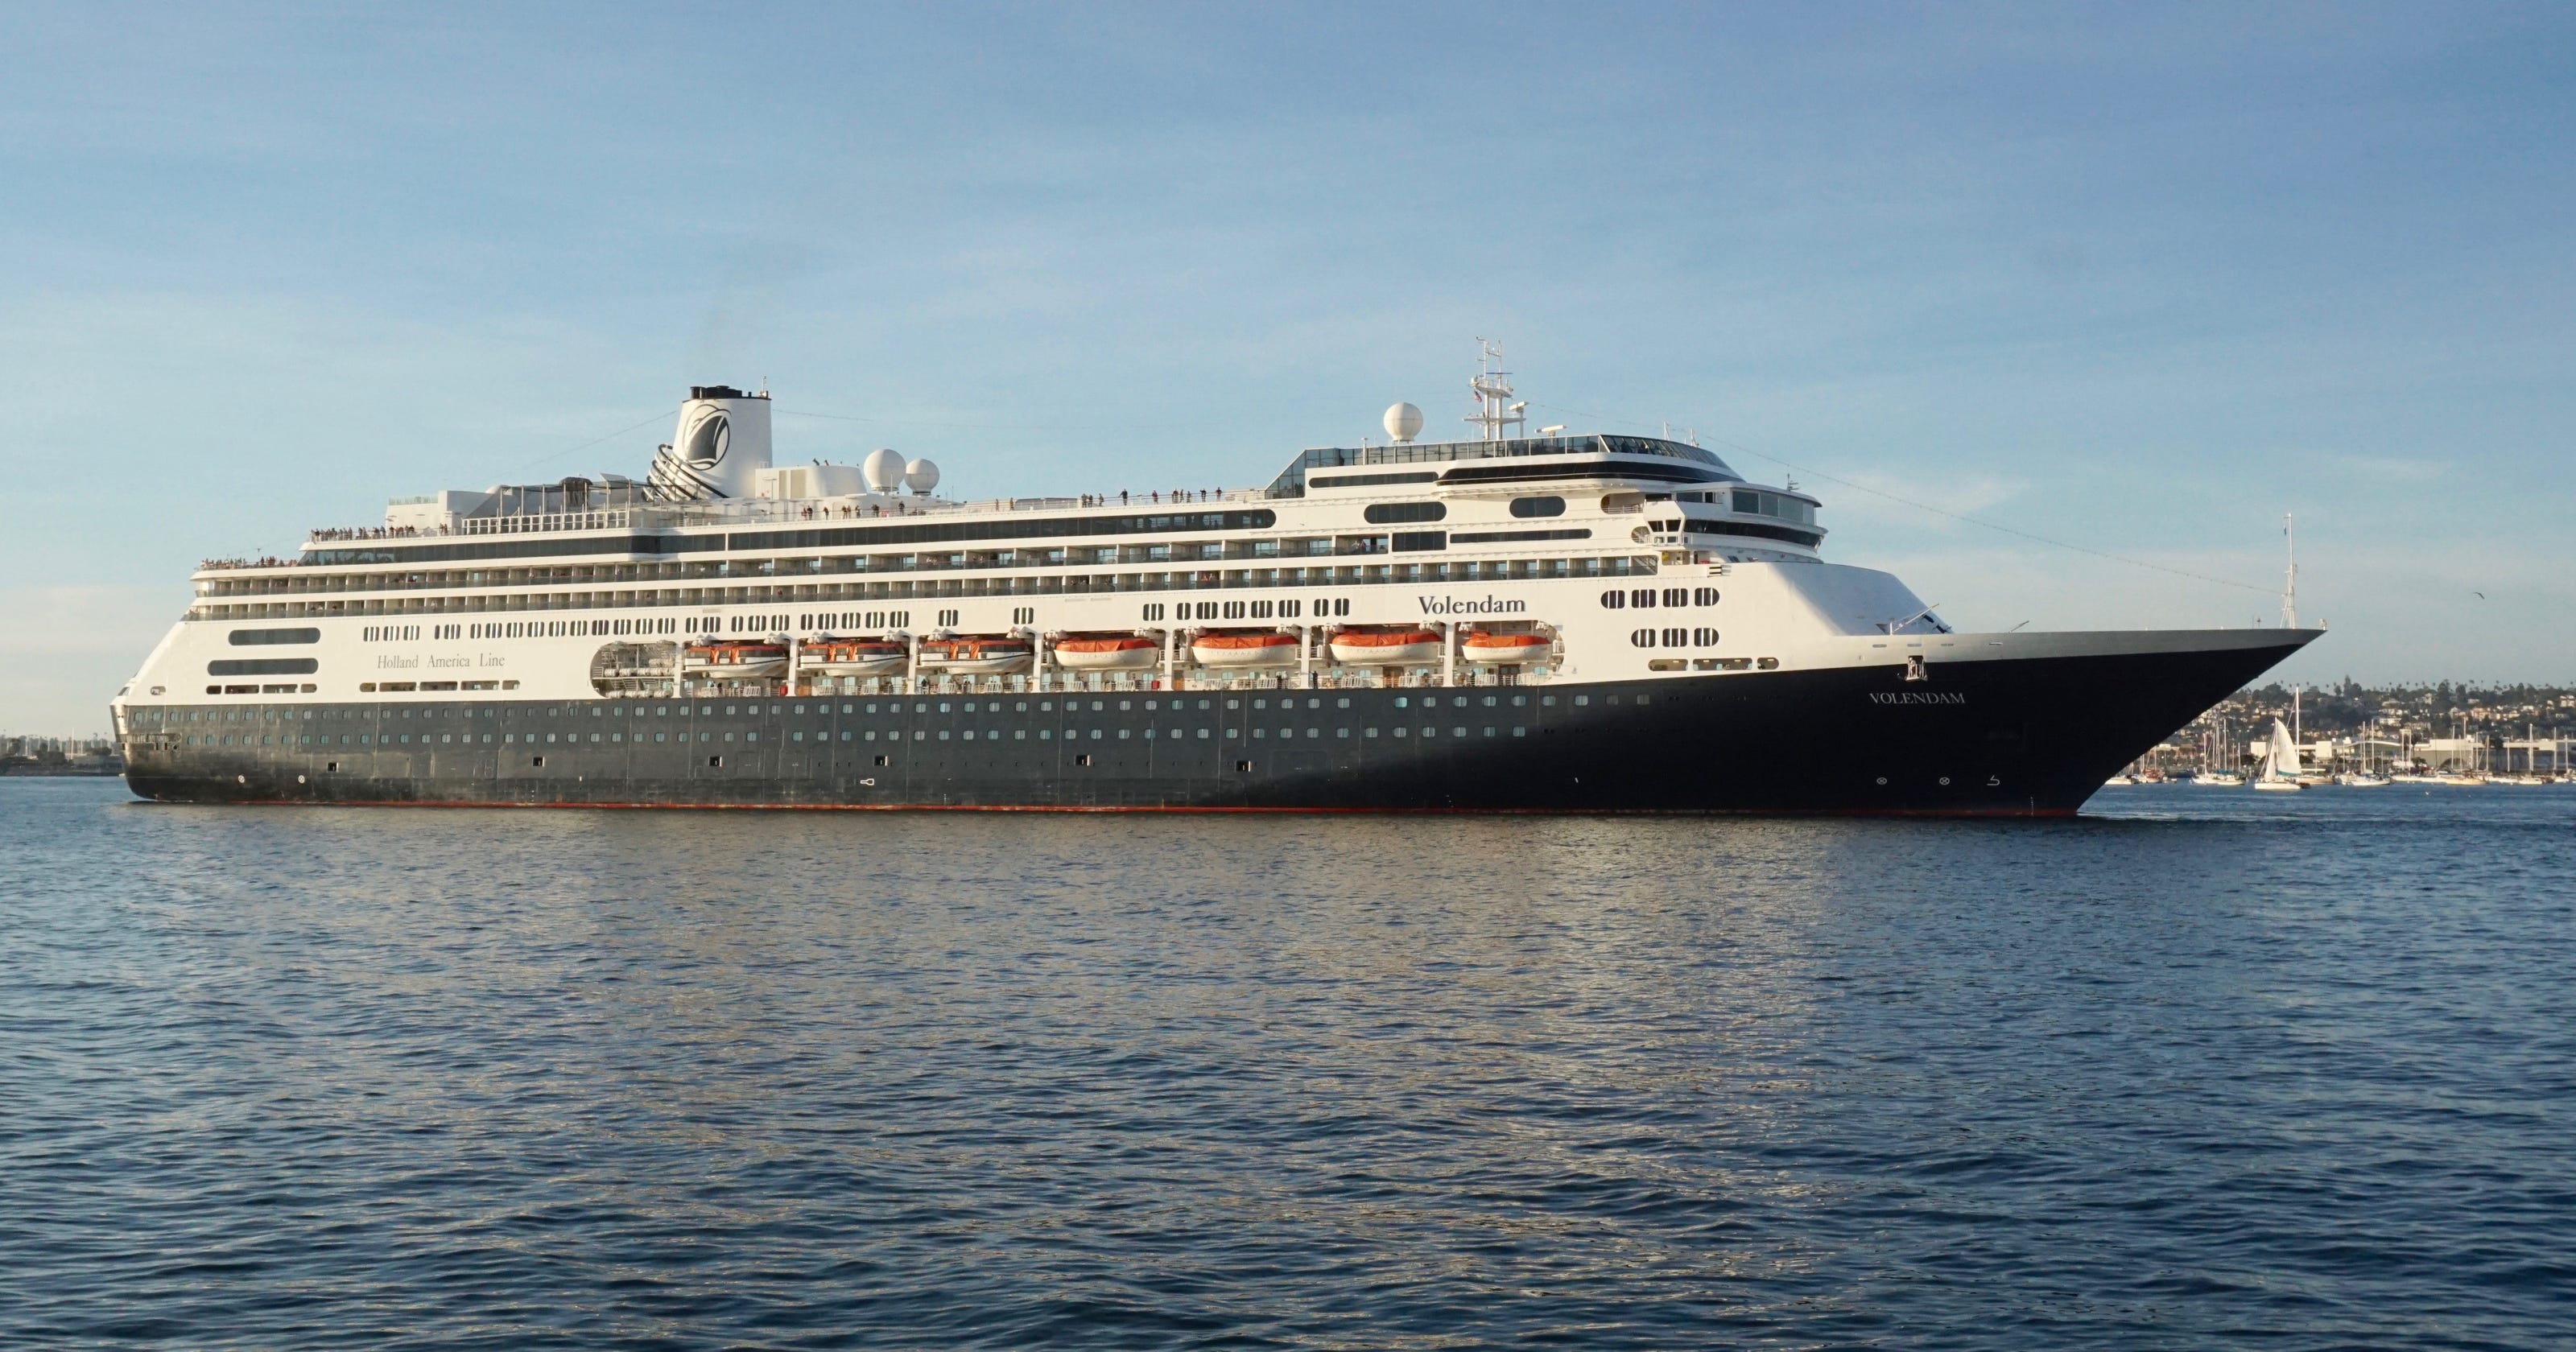 Holland America's Volendam cruise ship: Take a photo tour